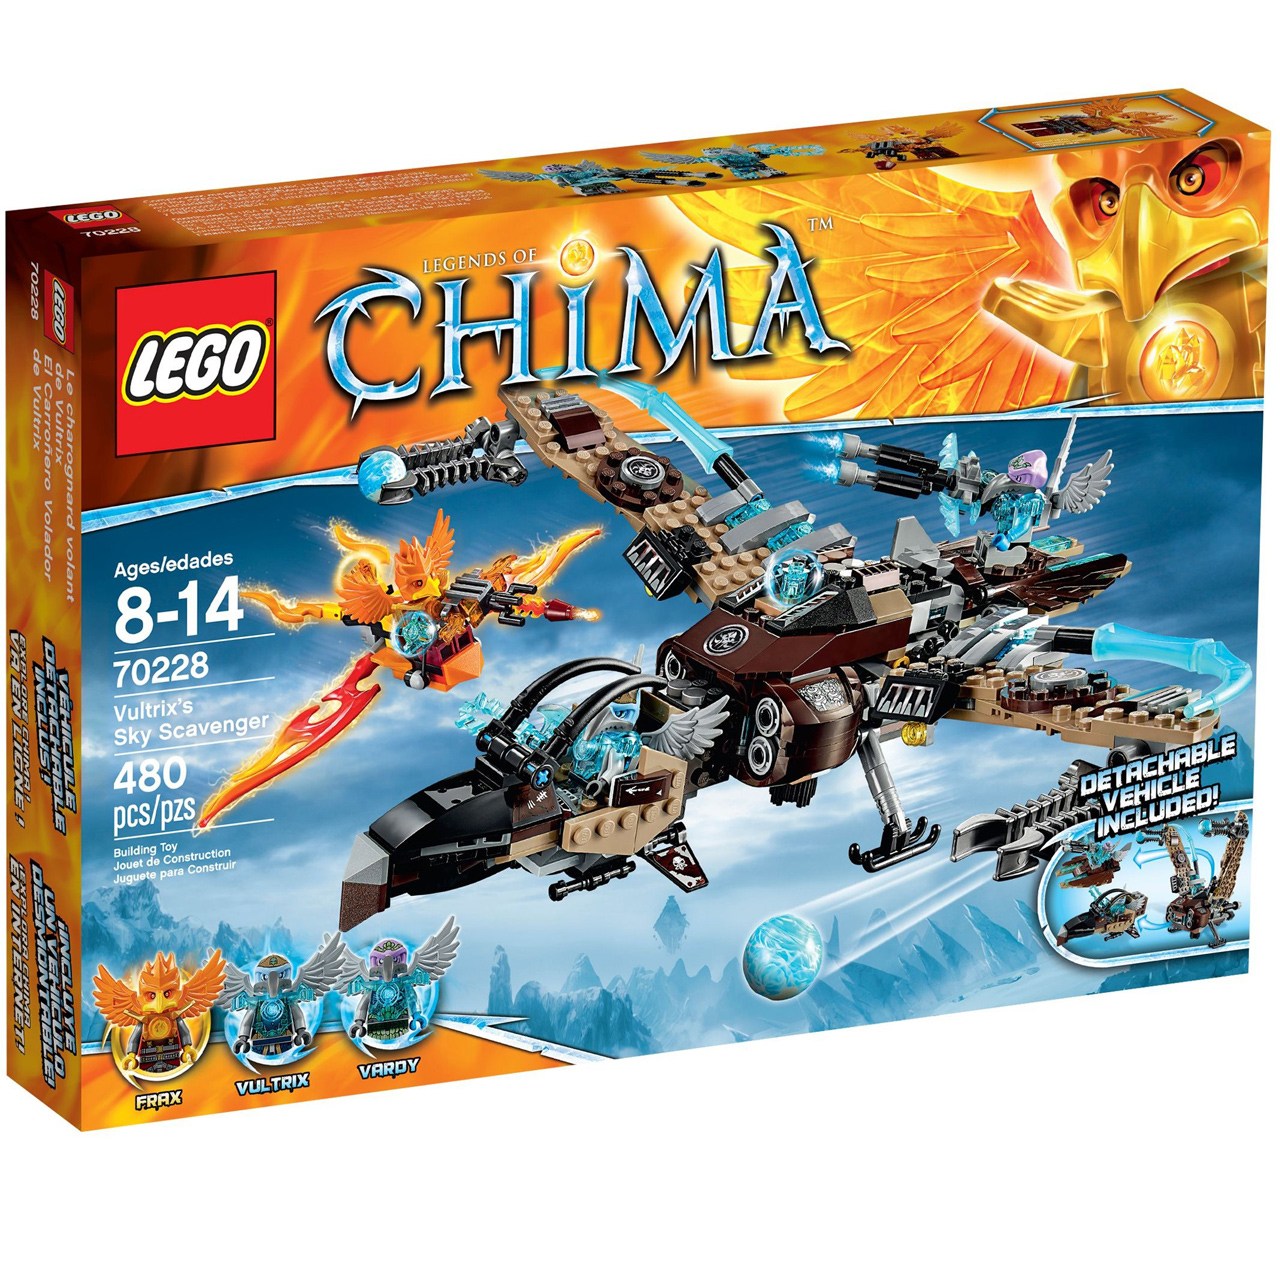 لگو سری Legends of Chima مدل Vultrixs Sky Scavenger کد 70228